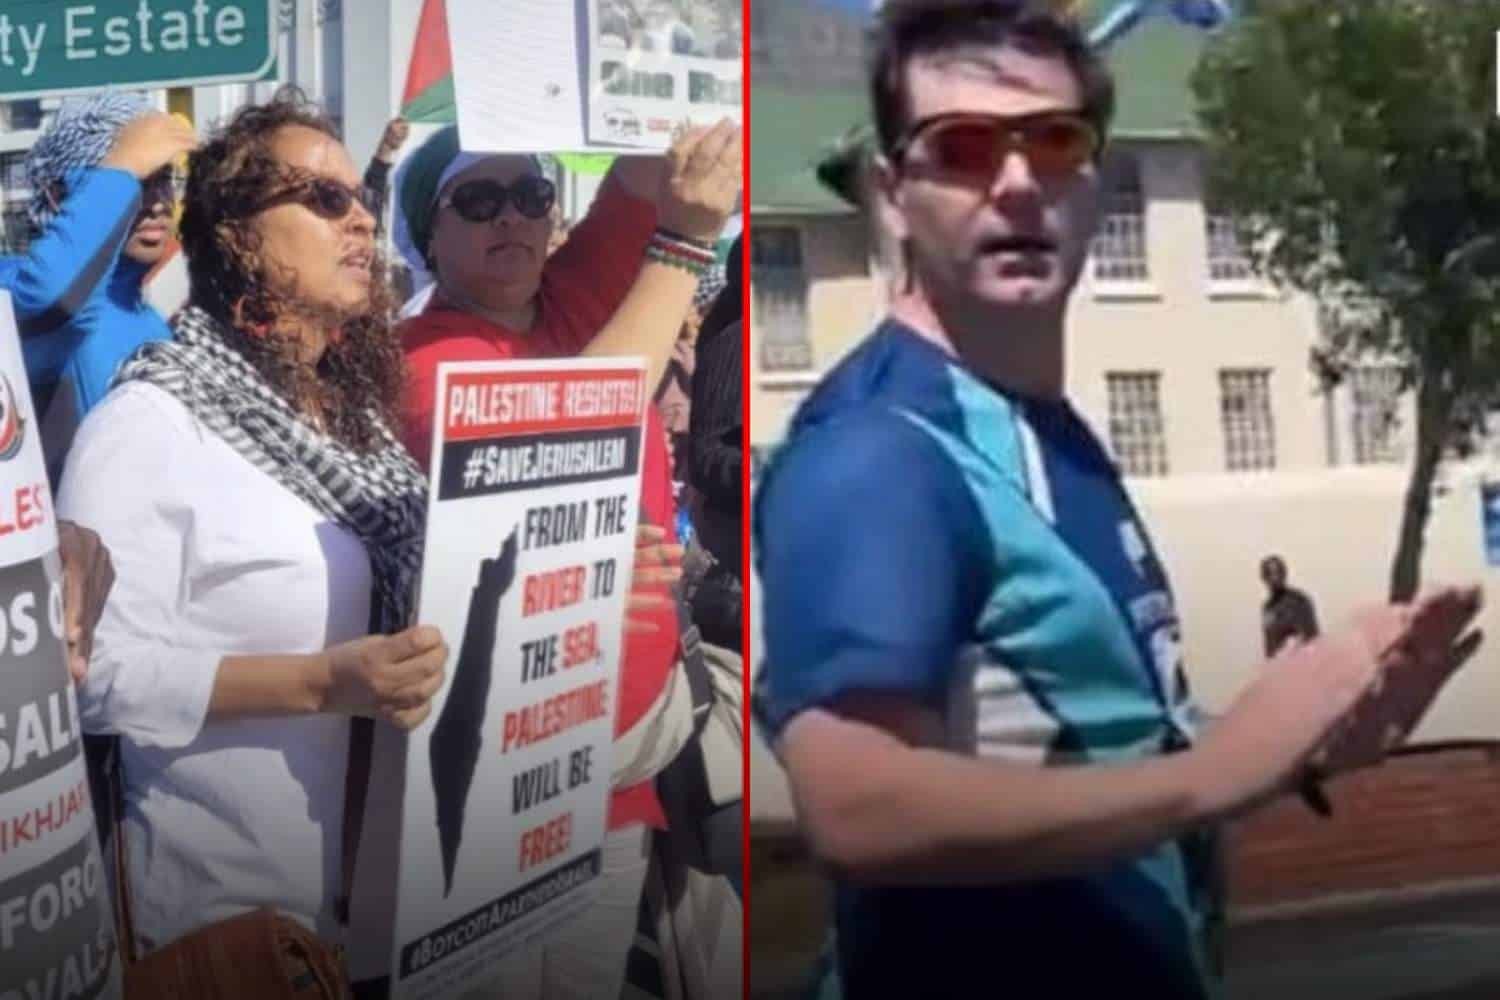 Cape Town marathon runner assault pro-palestine protester Gerhard van rensburg